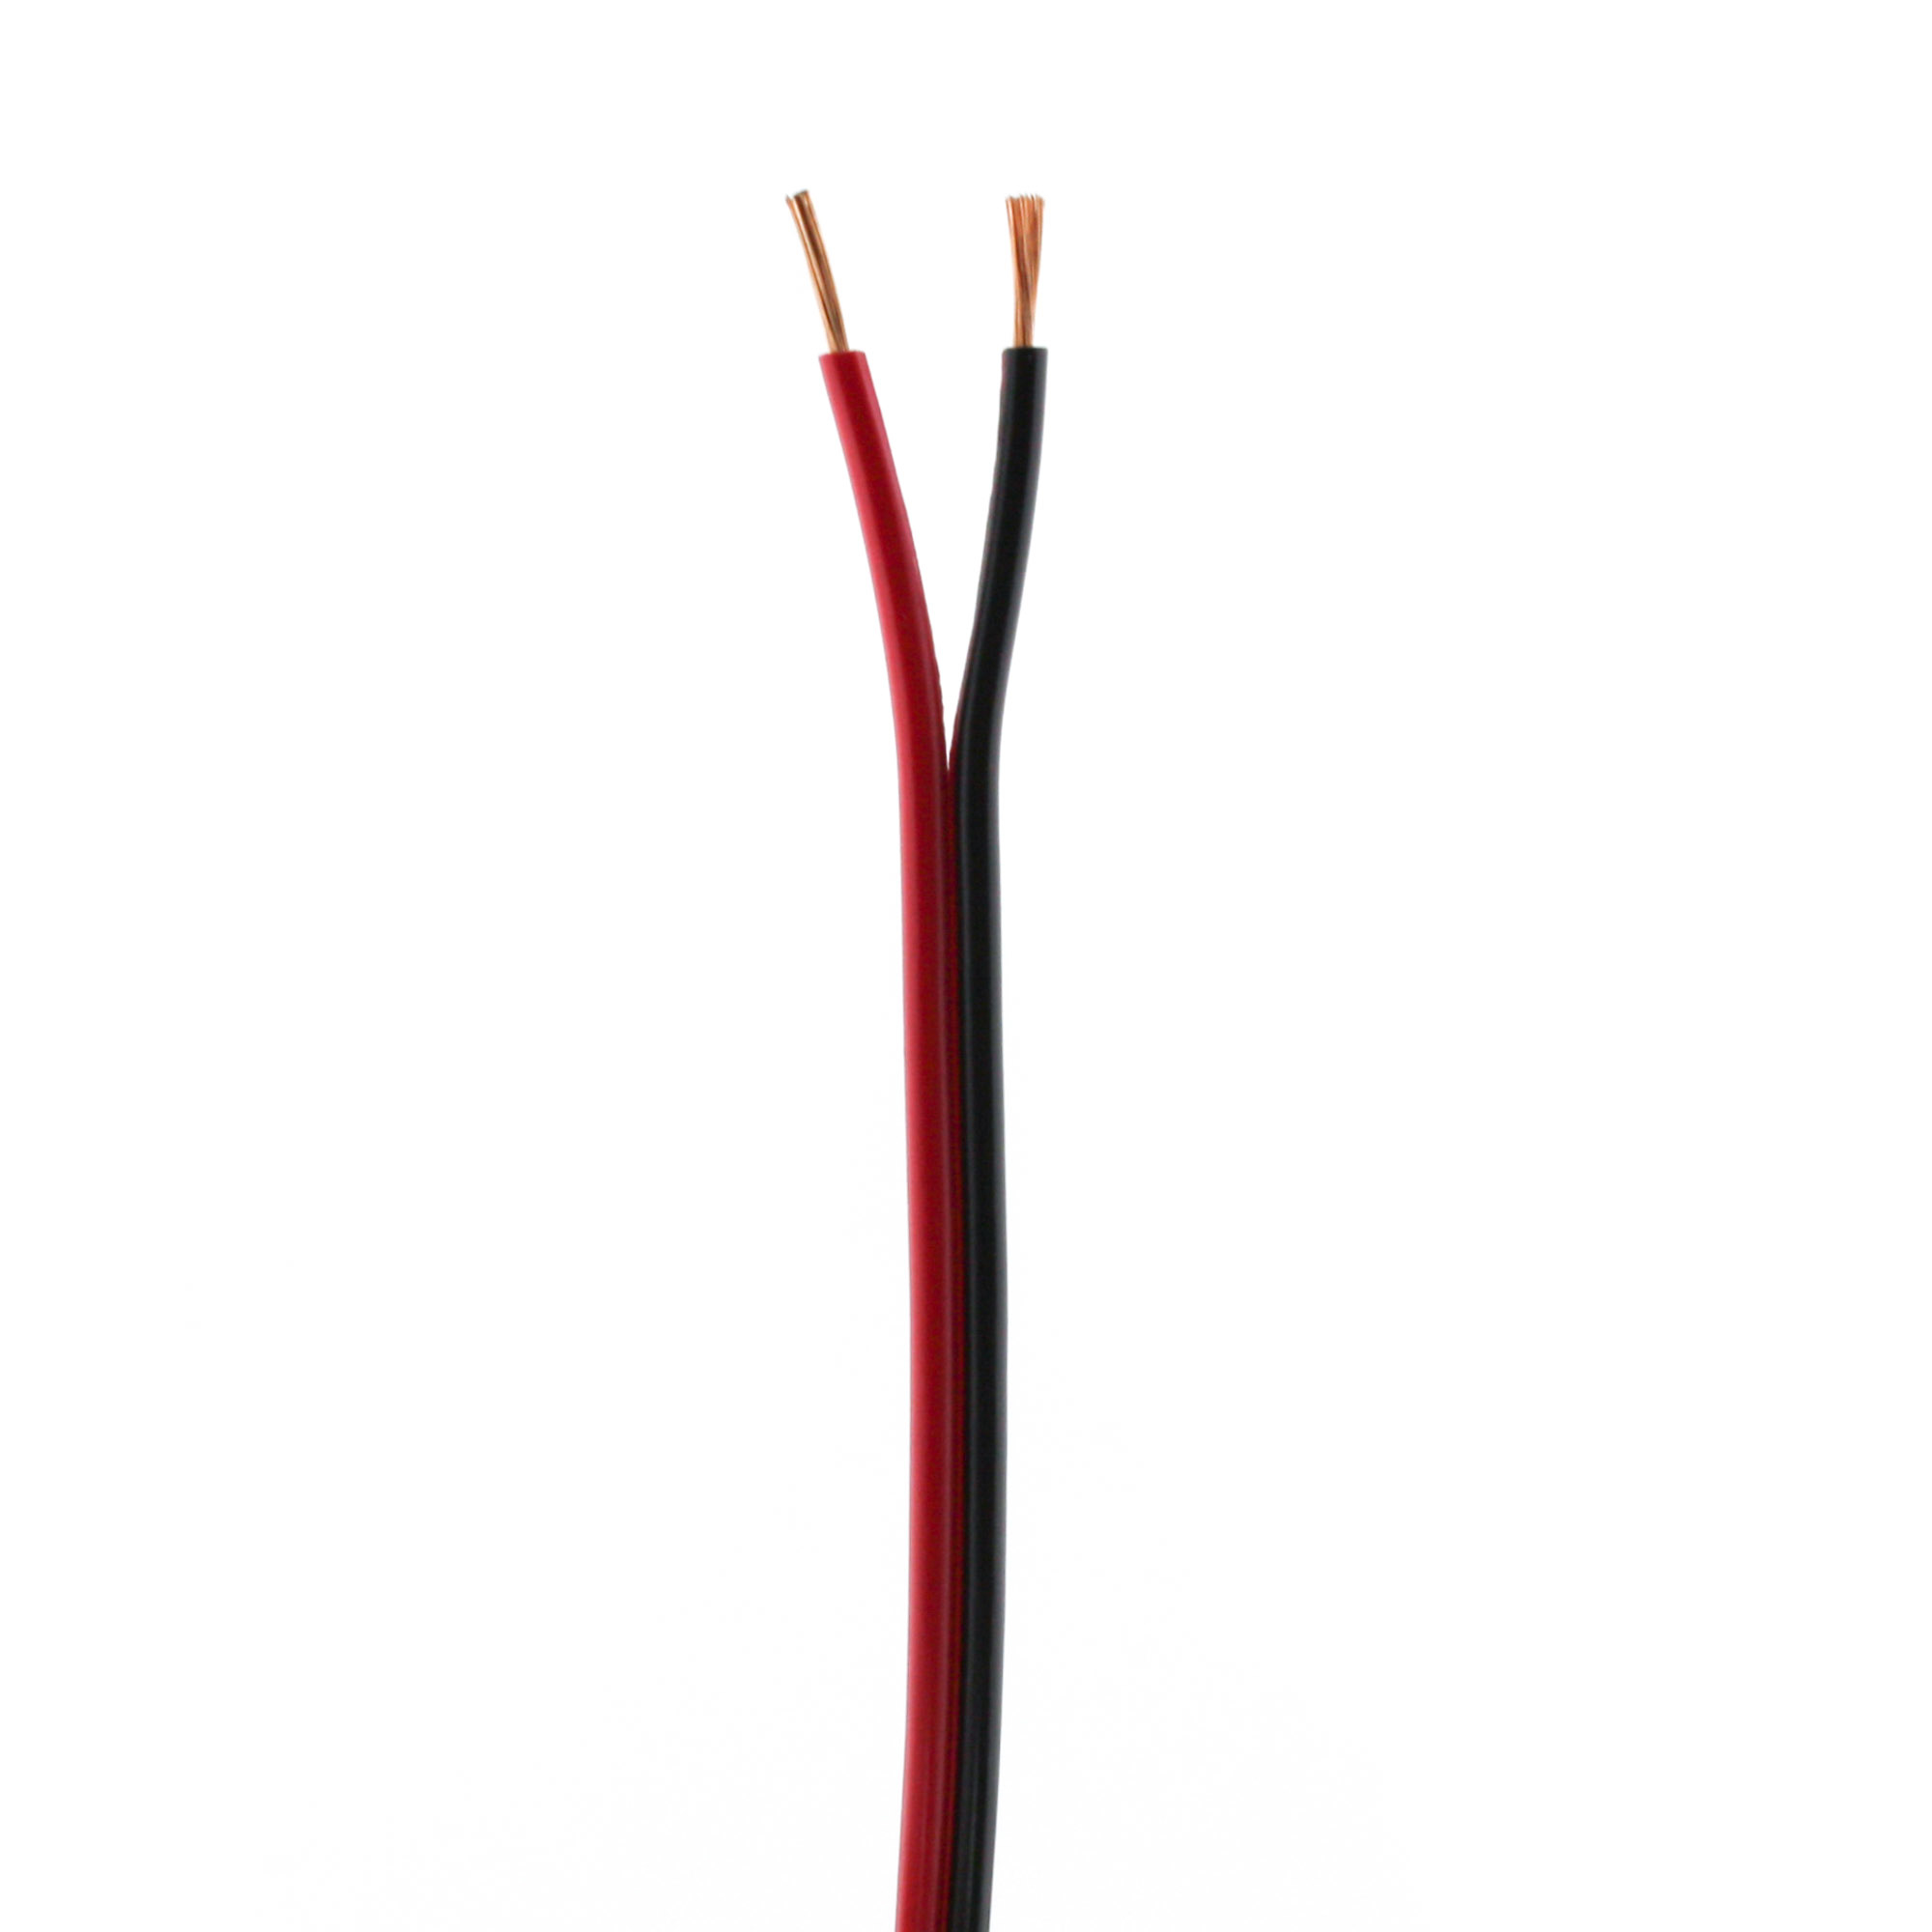 Loudspeaker cable red/black 50m 0.75mm